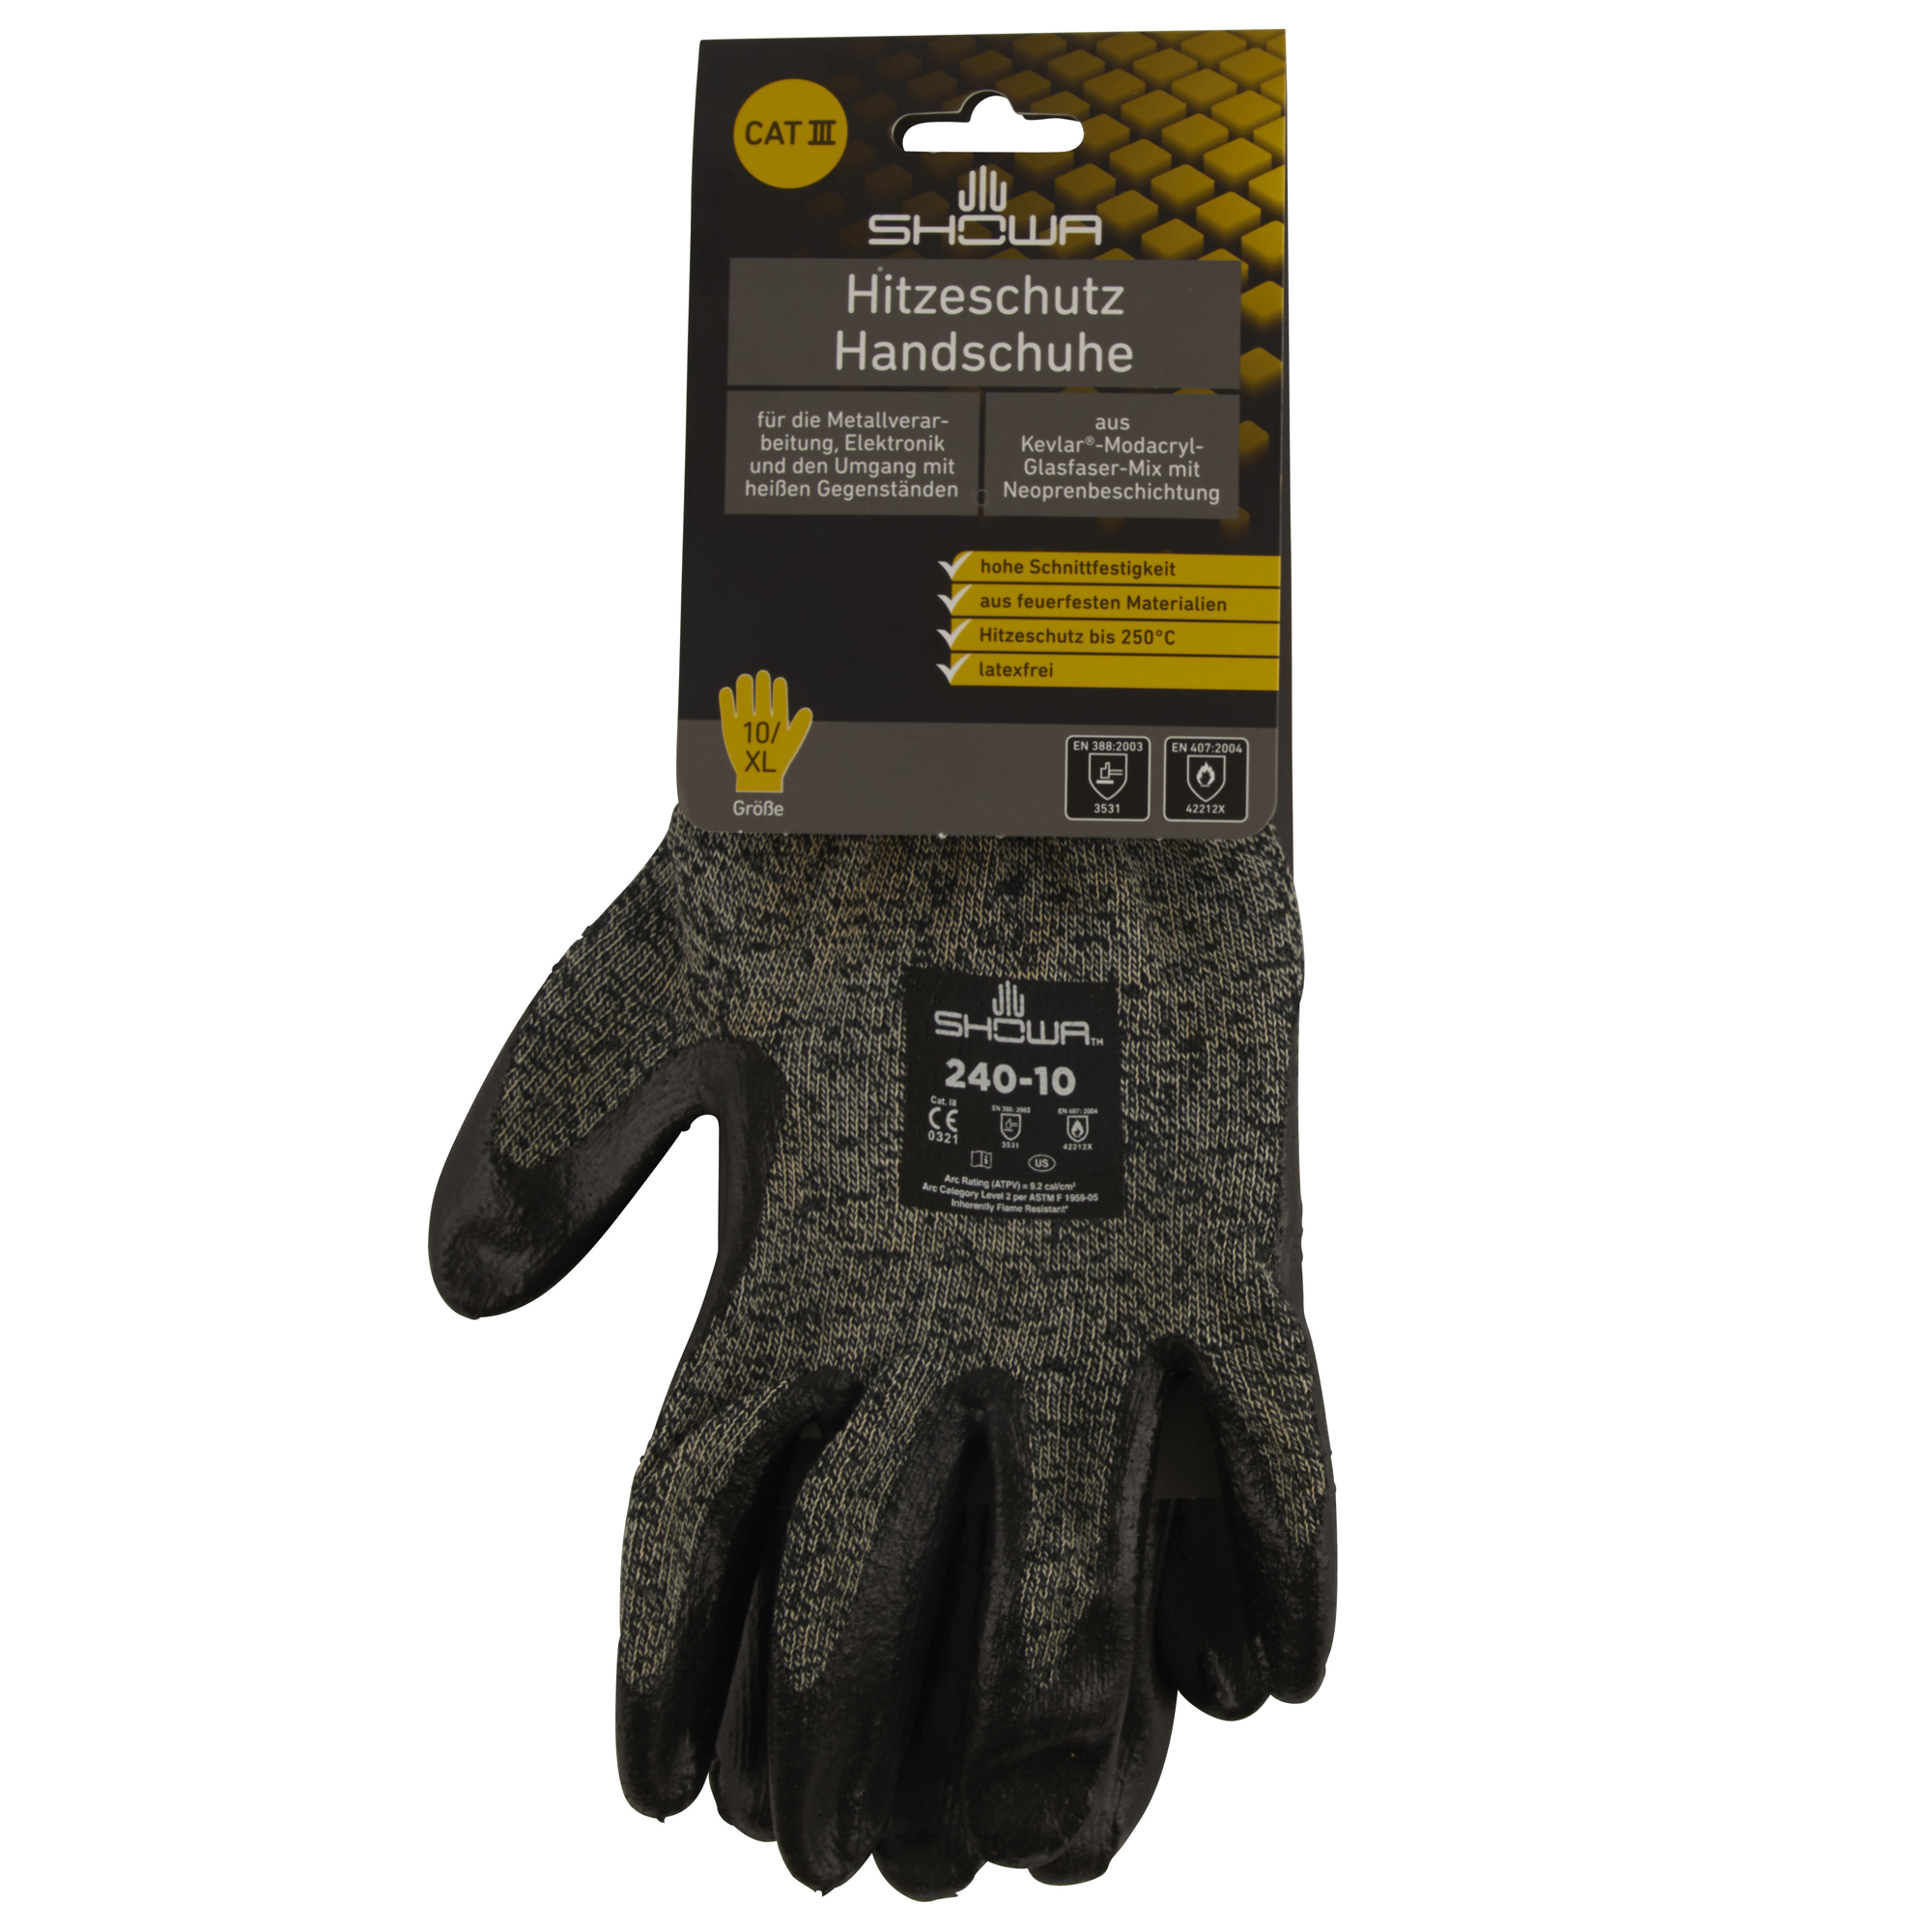 Hitzeschutz Handschuhe Größe 10/XL + product picture